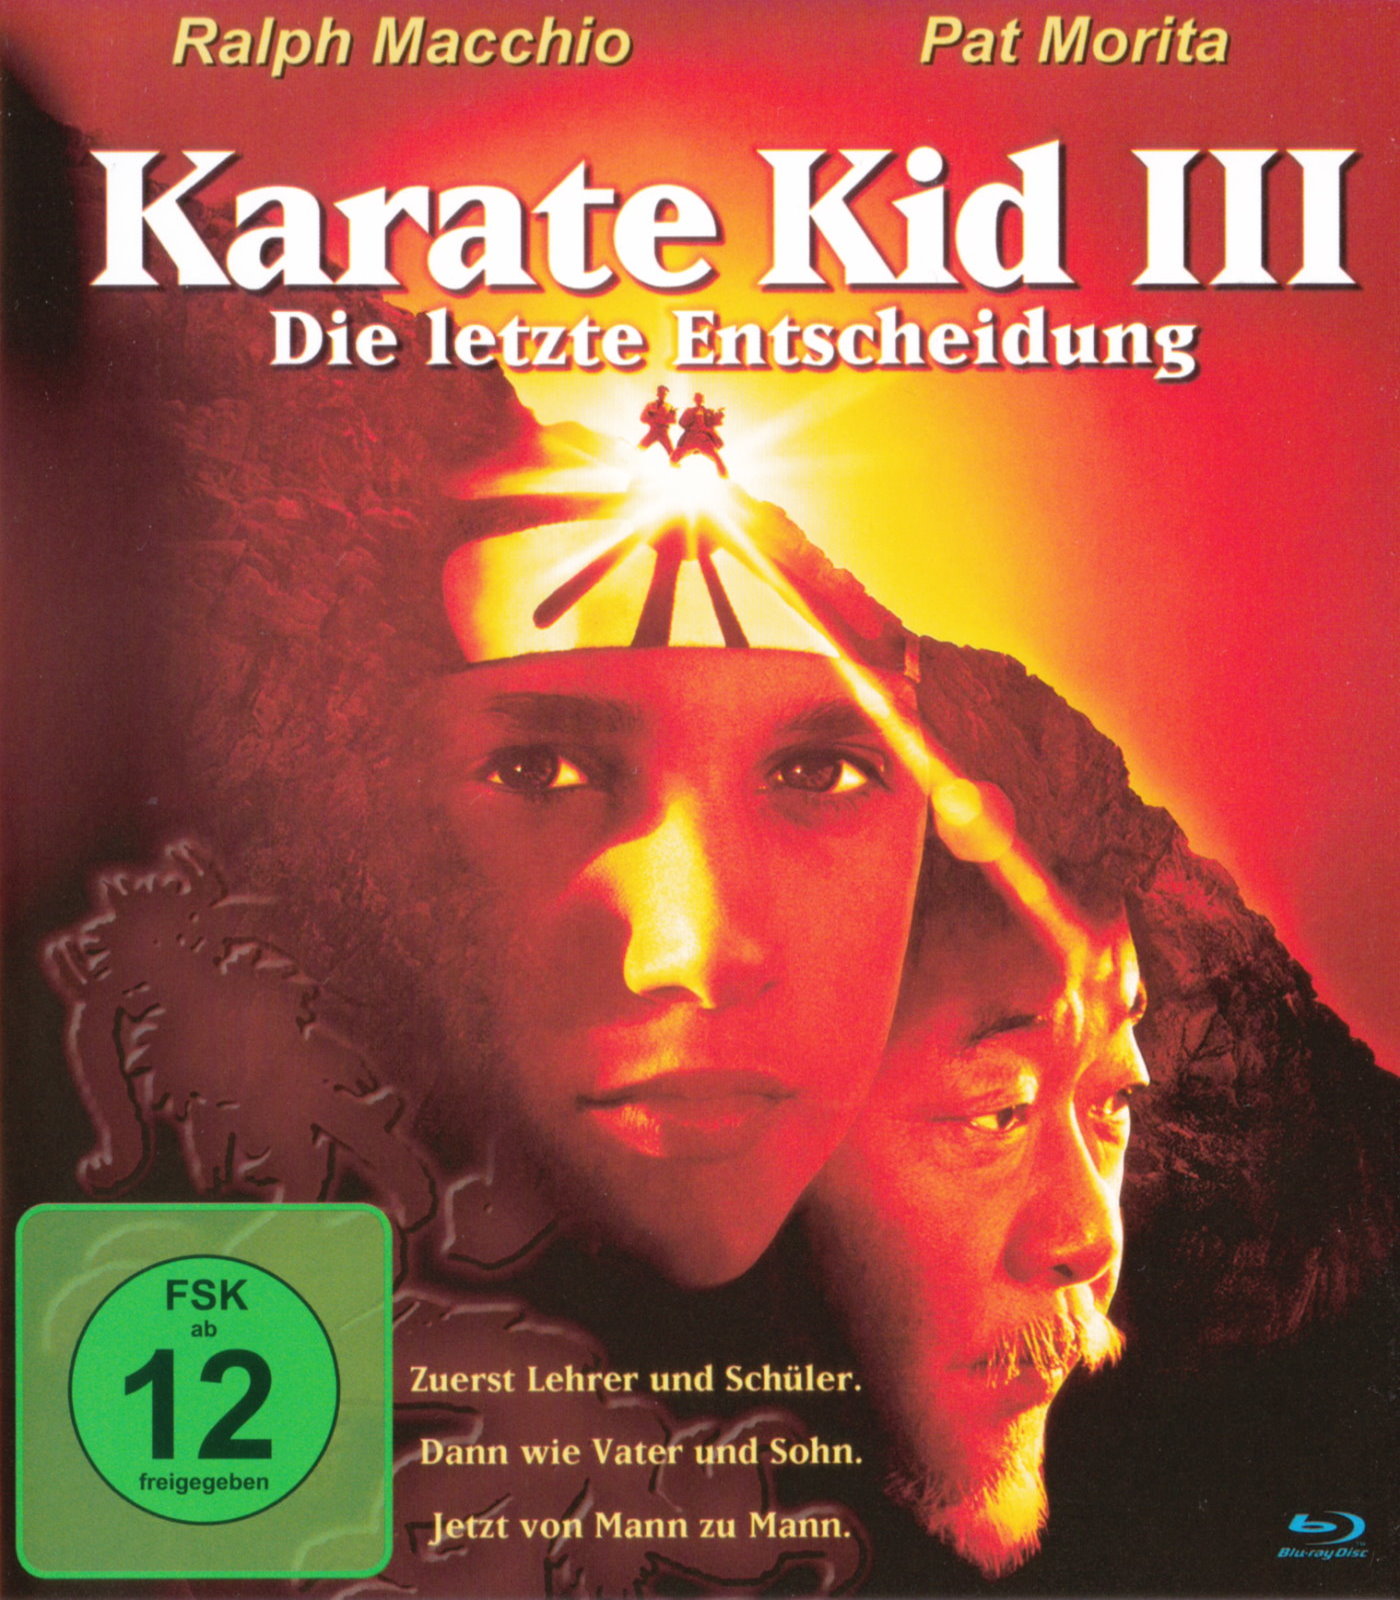 Cover - Karate Kid III - Die letzte Entscheidung.jpg